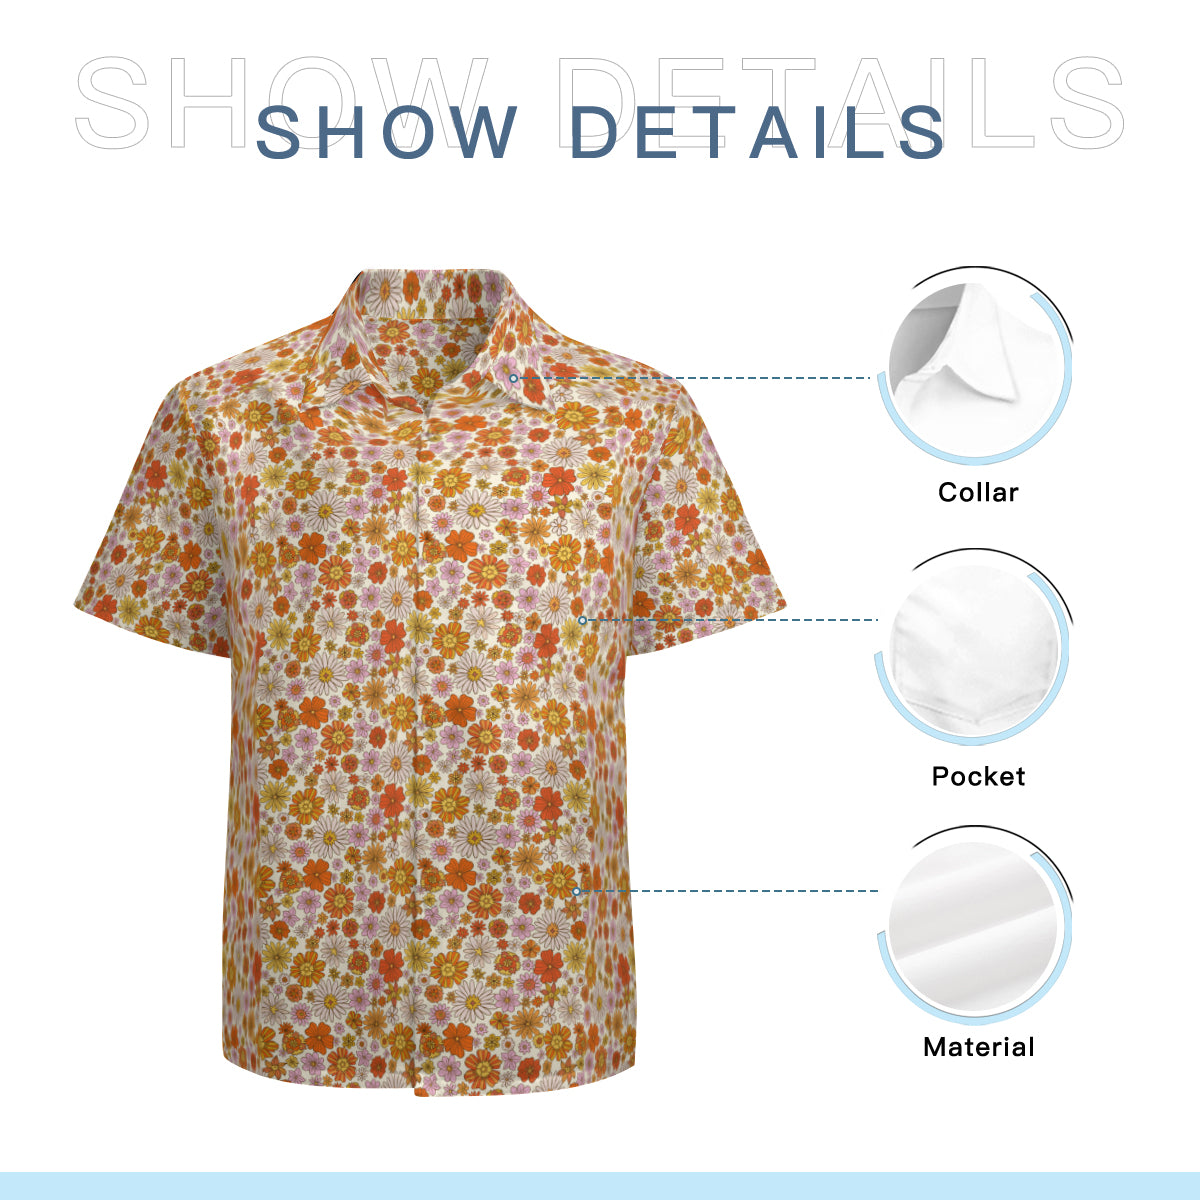 Vintage 70s style shirt, Retro Shirt Men, Hippie Shirt Men, Men's Floral shirt, 70s Shirt Men, 70s inspired shirt, Men's dress shirt